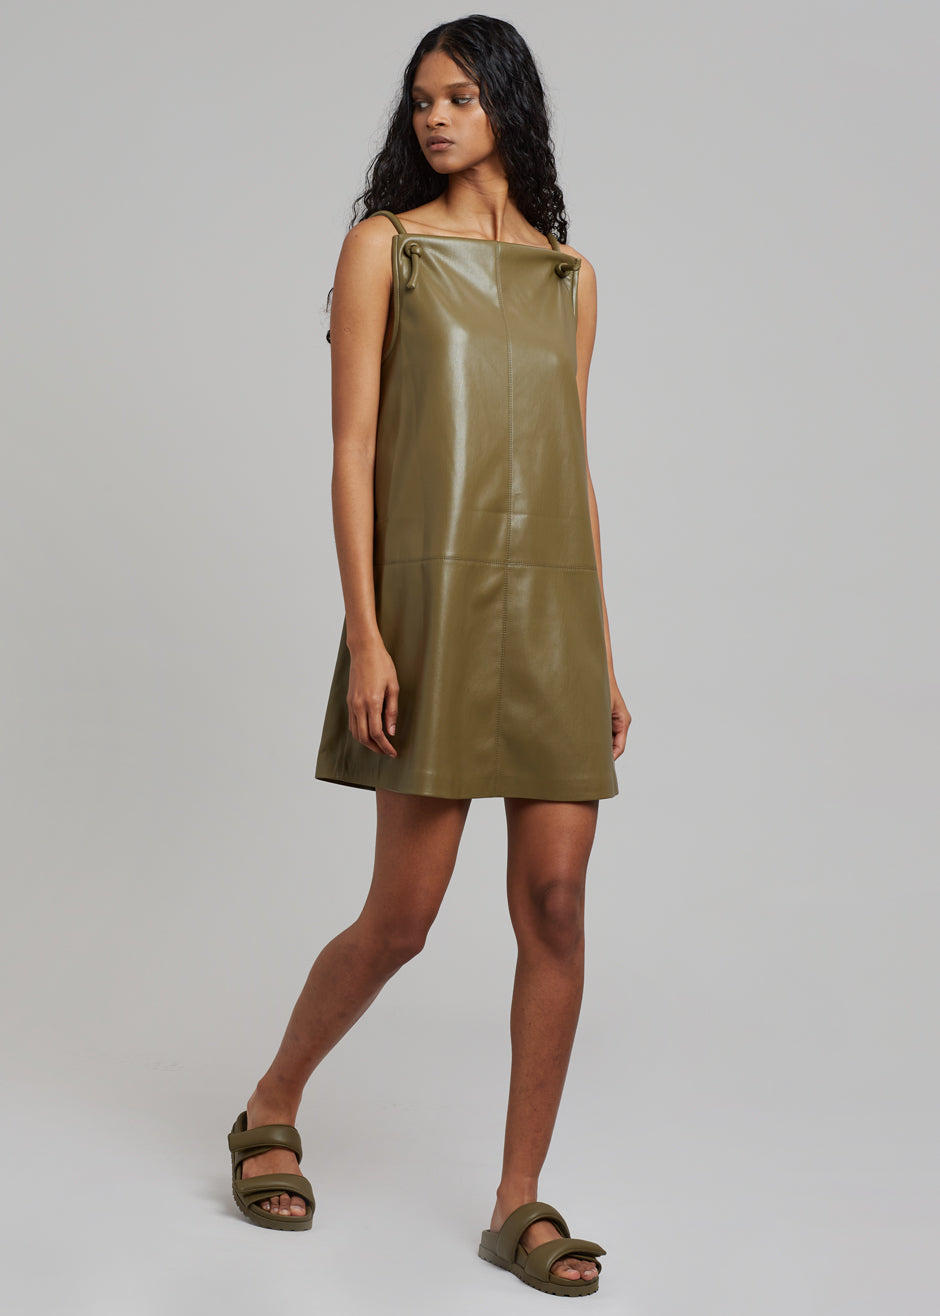 Nanushka Claire Vegan Leather Dress - Olive - 4